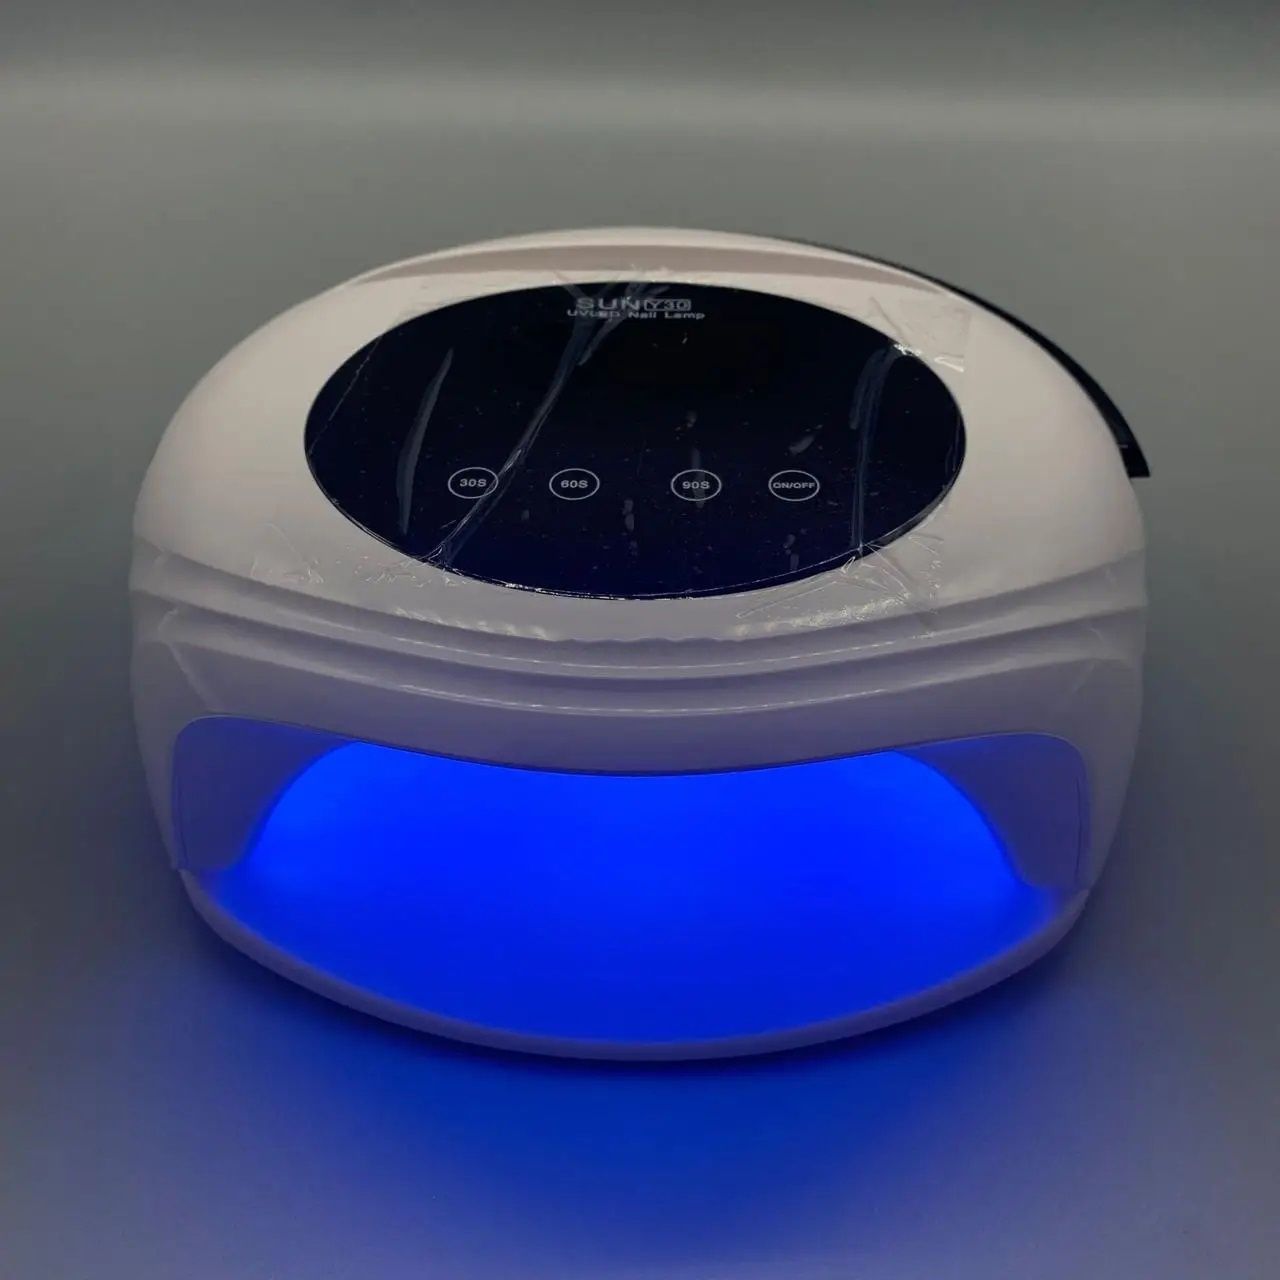 УФ LED лампа для маникюра SUN Y30 248 Вт (на аккумуляторе, с дисплеем)